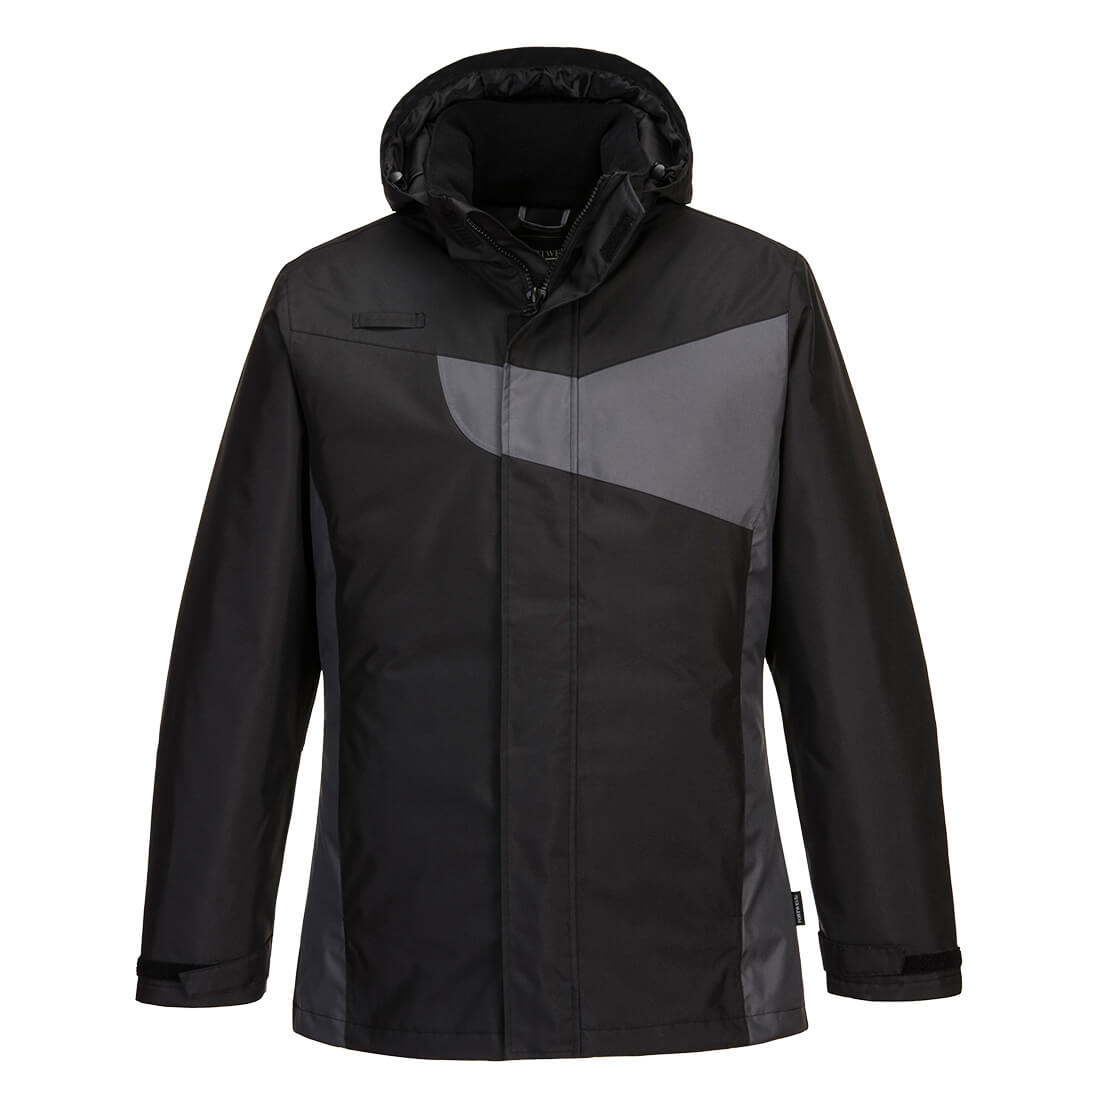 Portwest PW260 PW2 Winter Jacket Black / Zoom Grey Large